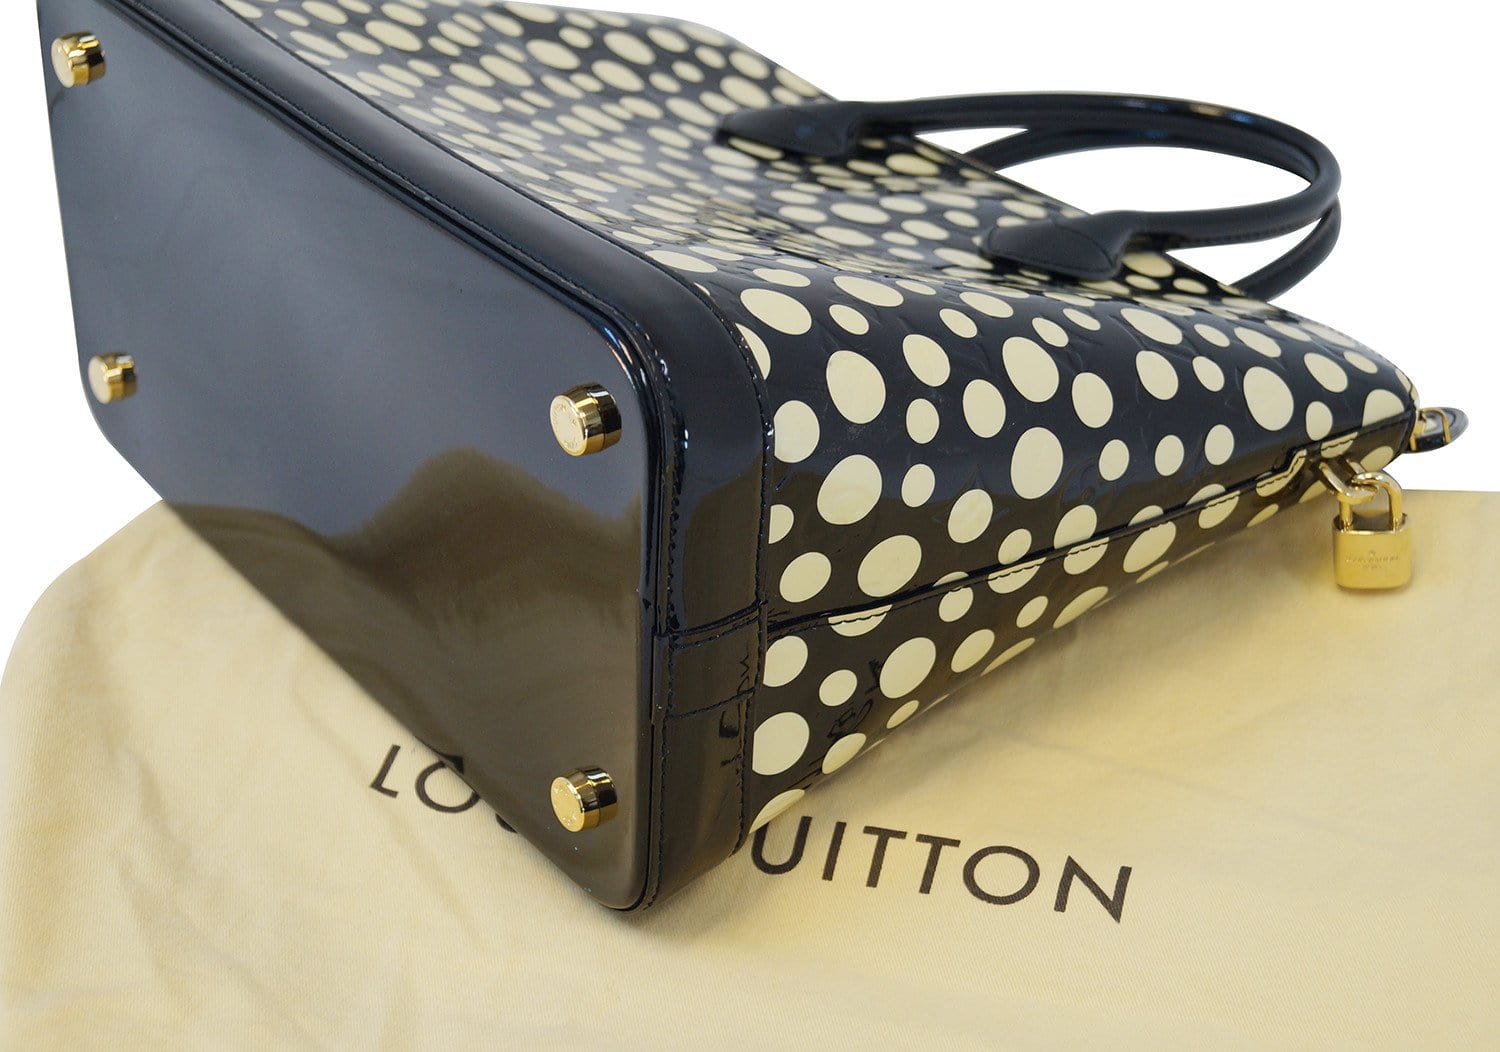 Authentic Yayoi Kusama for Louis Vuitton Black and White Polka Dot